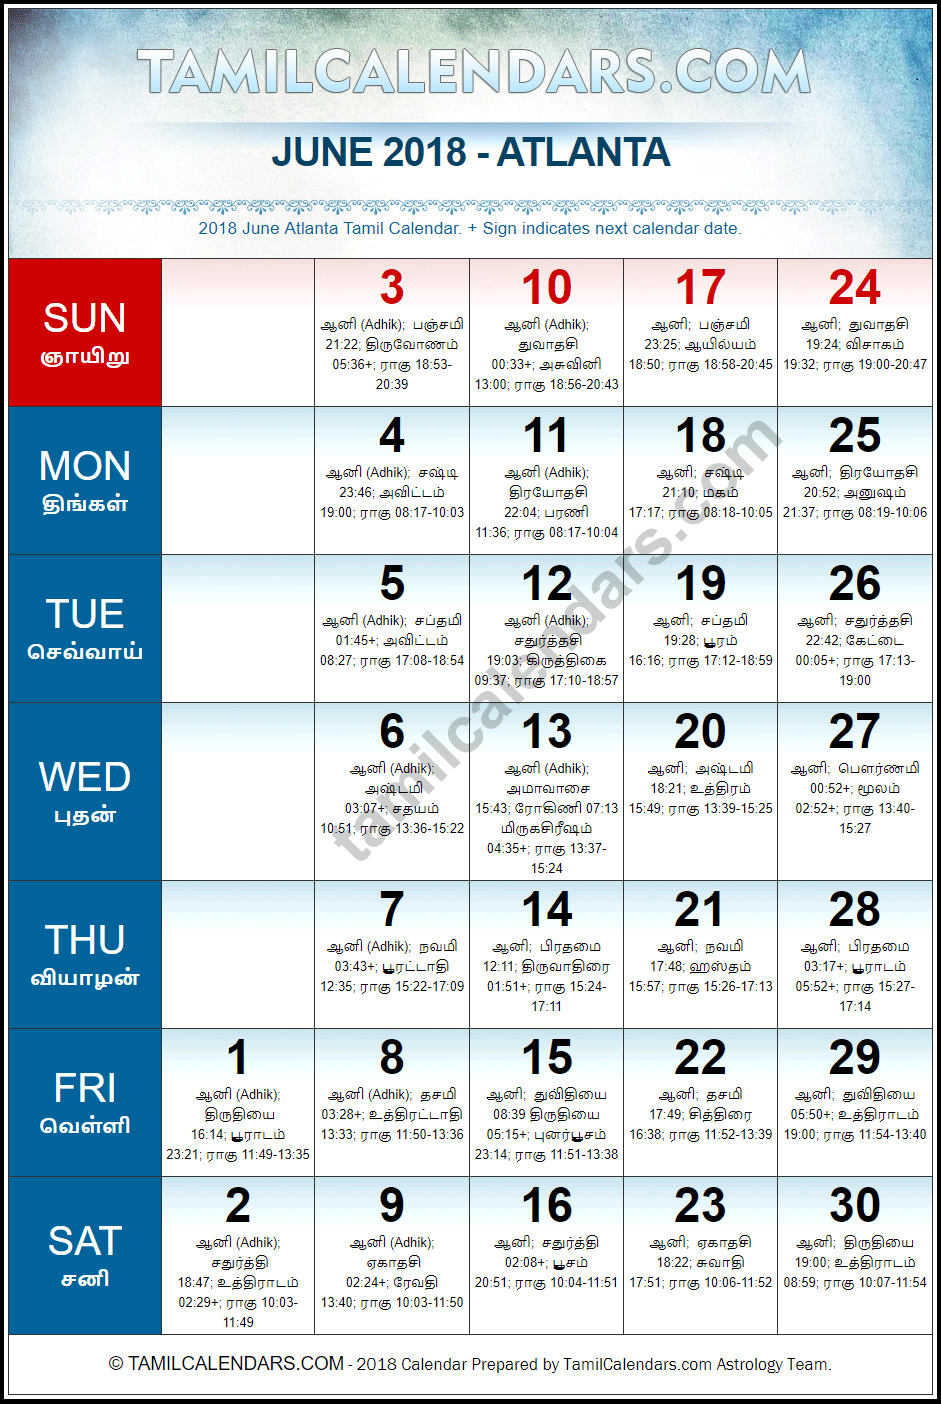 June 2018 Tamil Calendar for Atlanta, USA